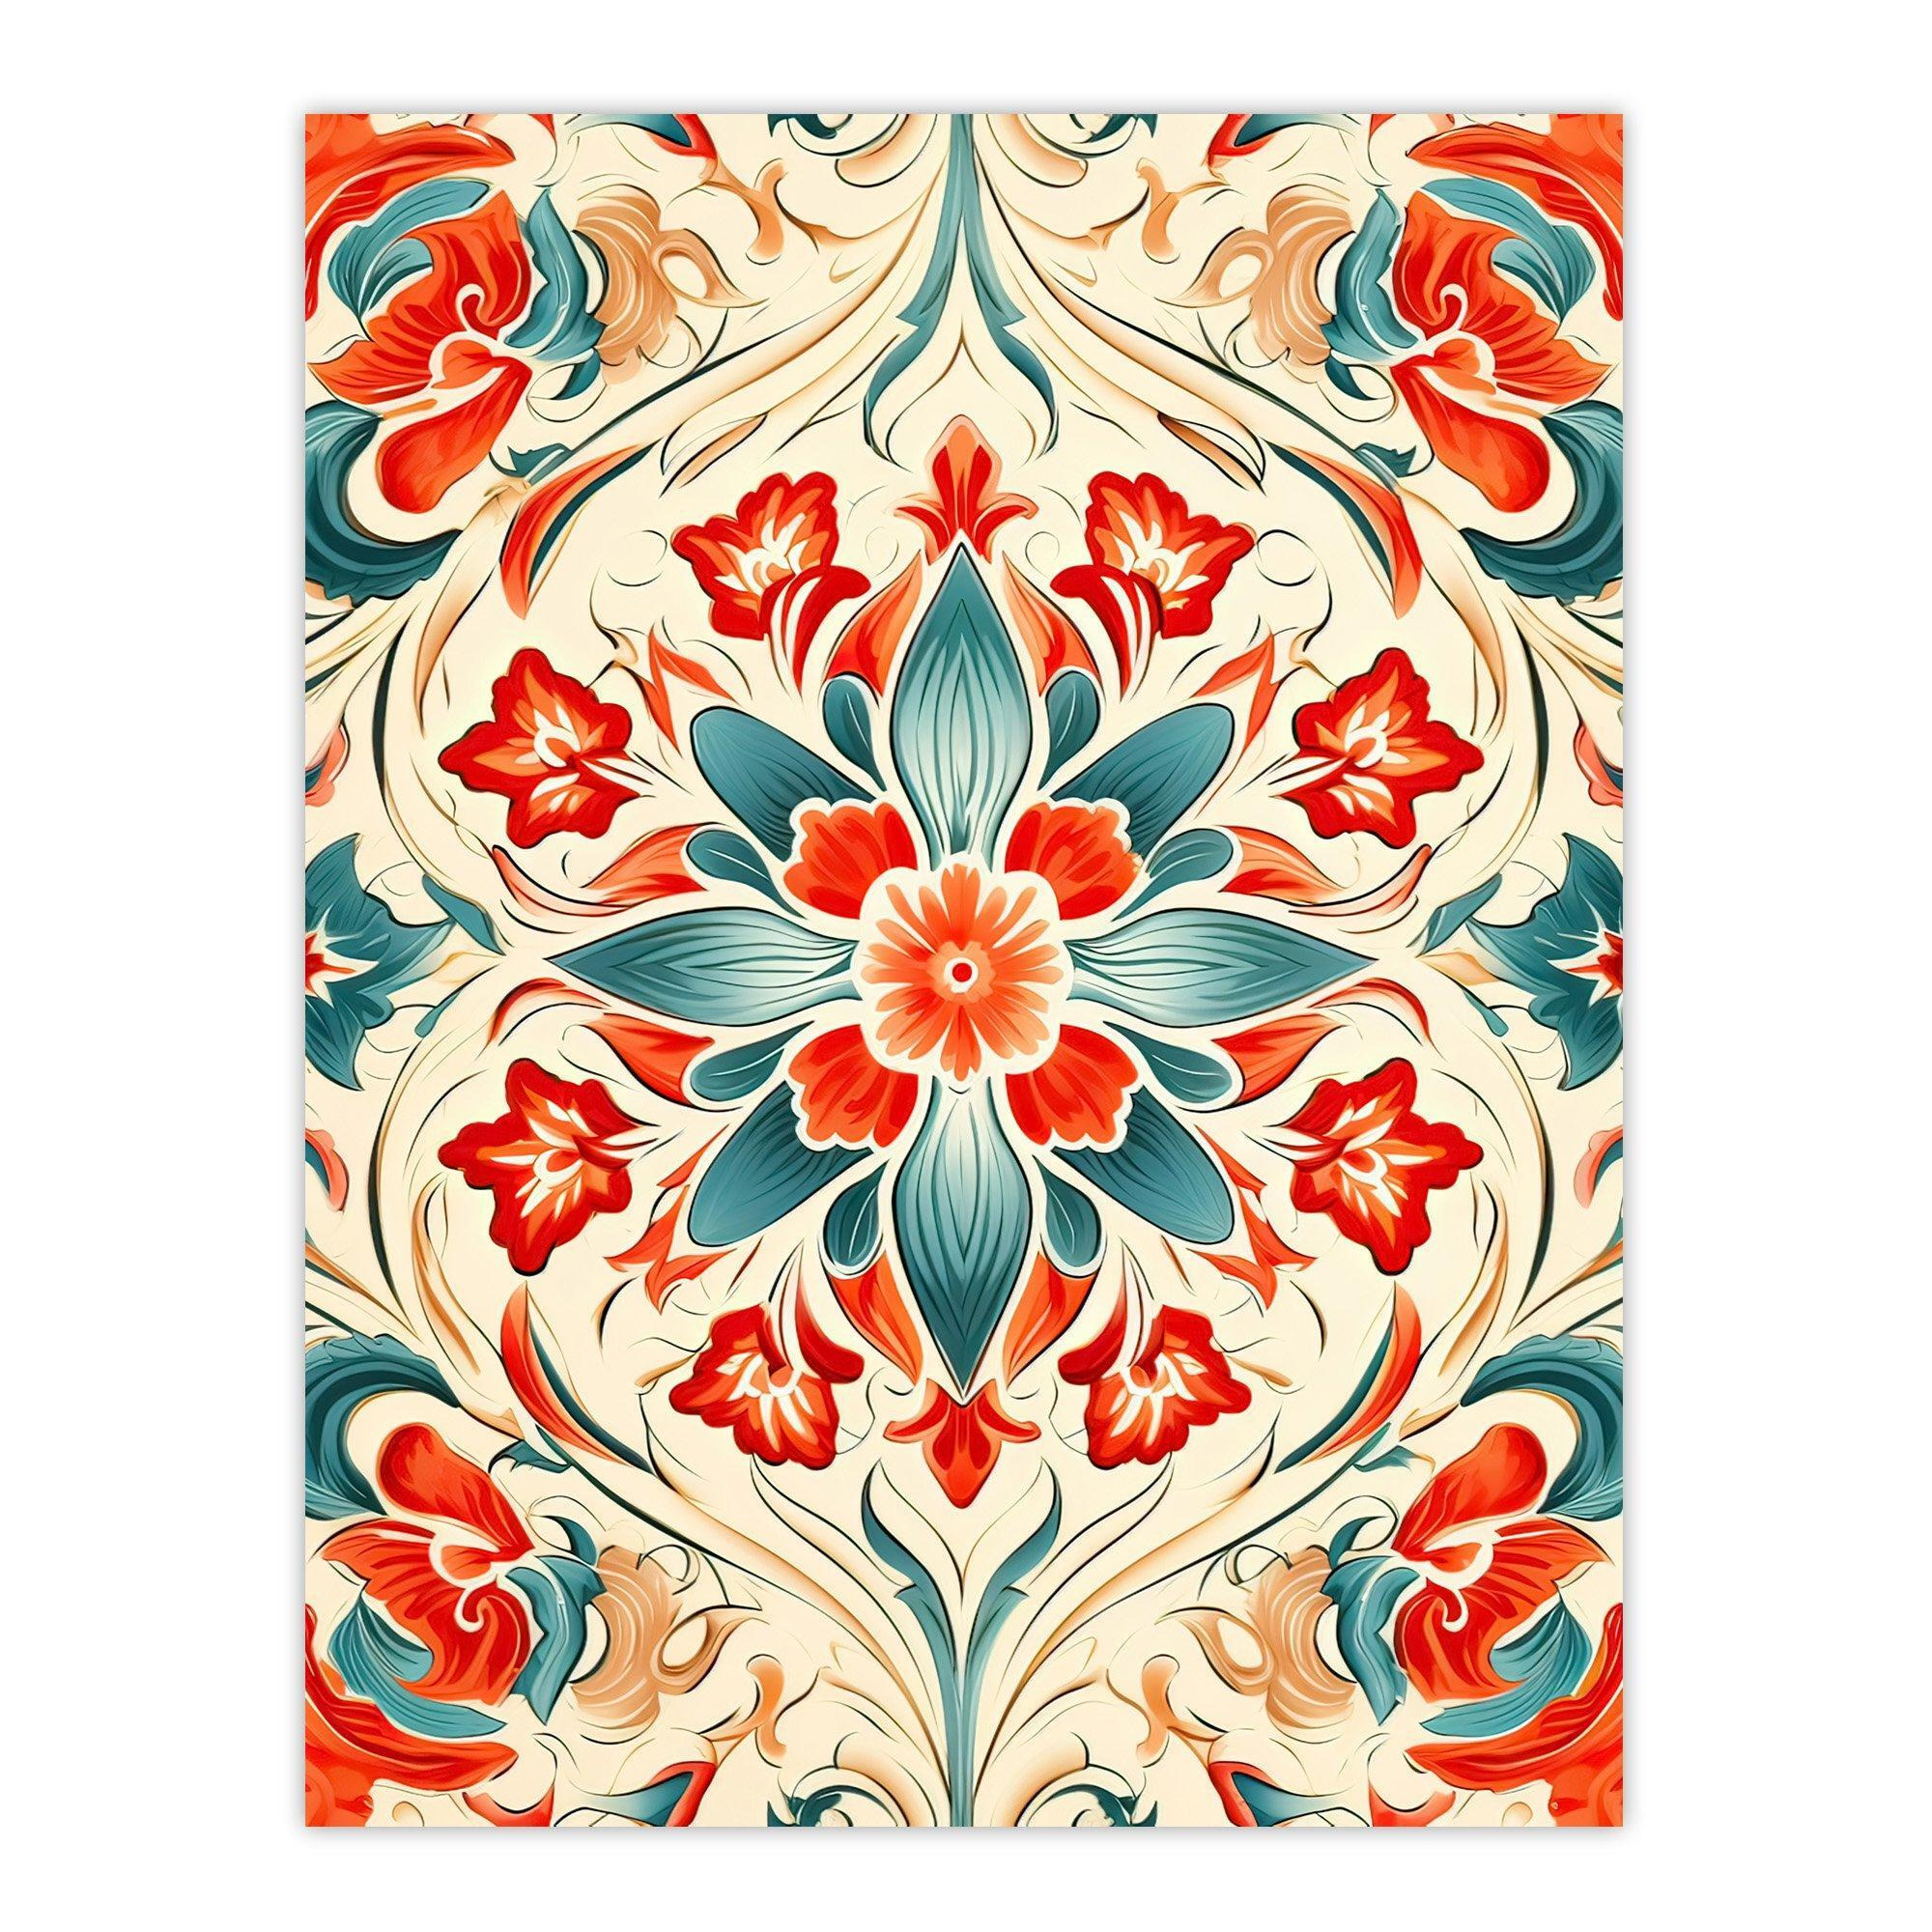 Bright Arabesque Flower Design Red Blue Cream Ornate Symmetrical Floral Pattern Unframed Wall Art Print Poster Home Decor Premium - image 1